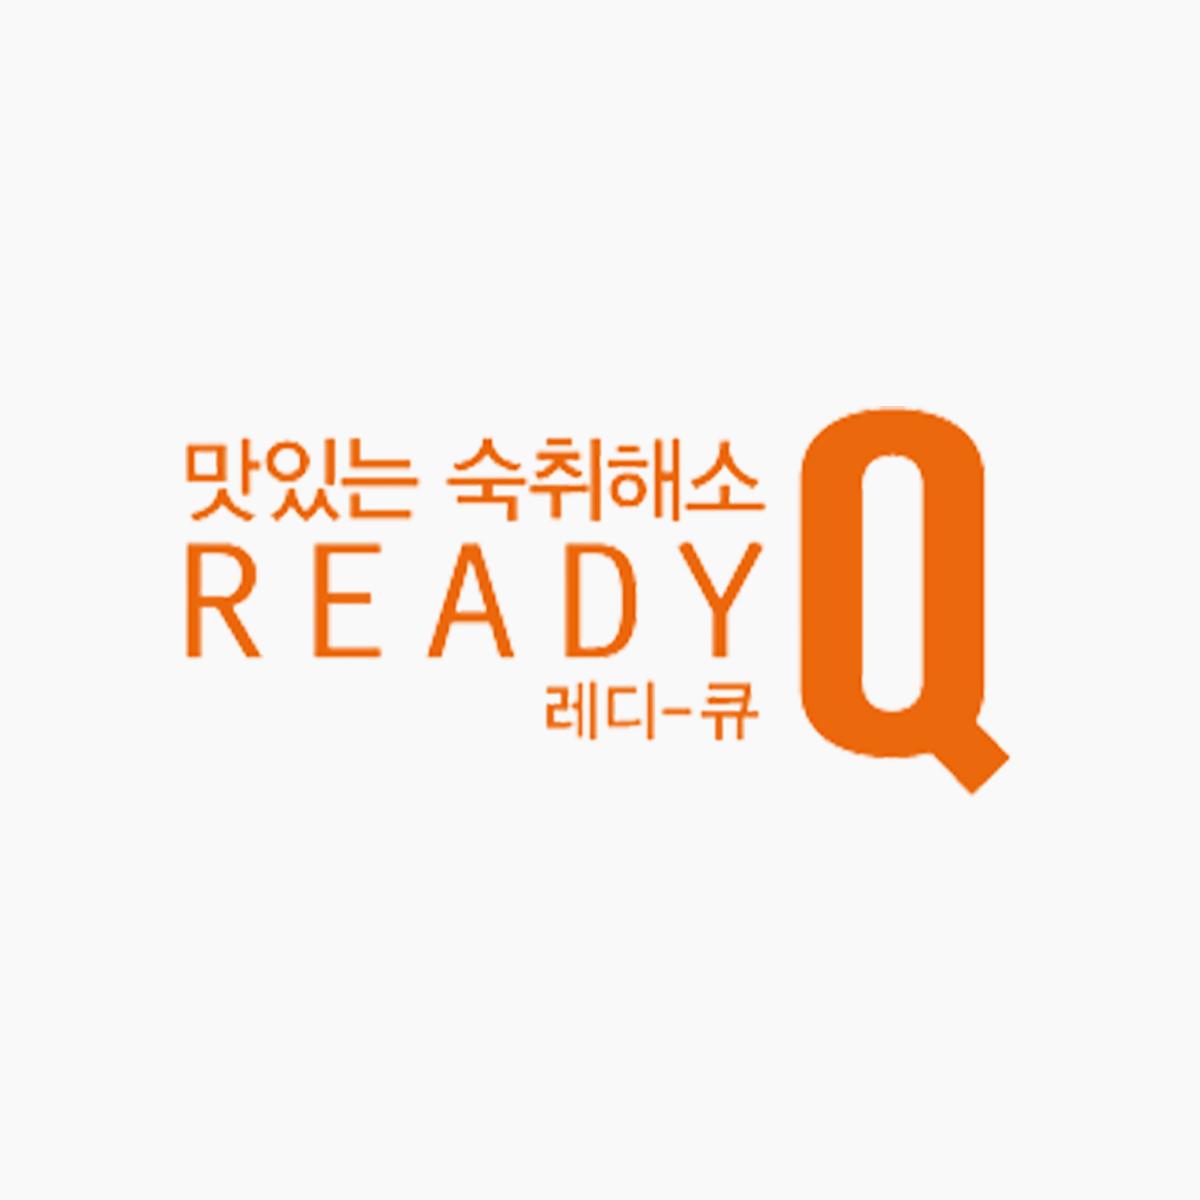 Ready Q